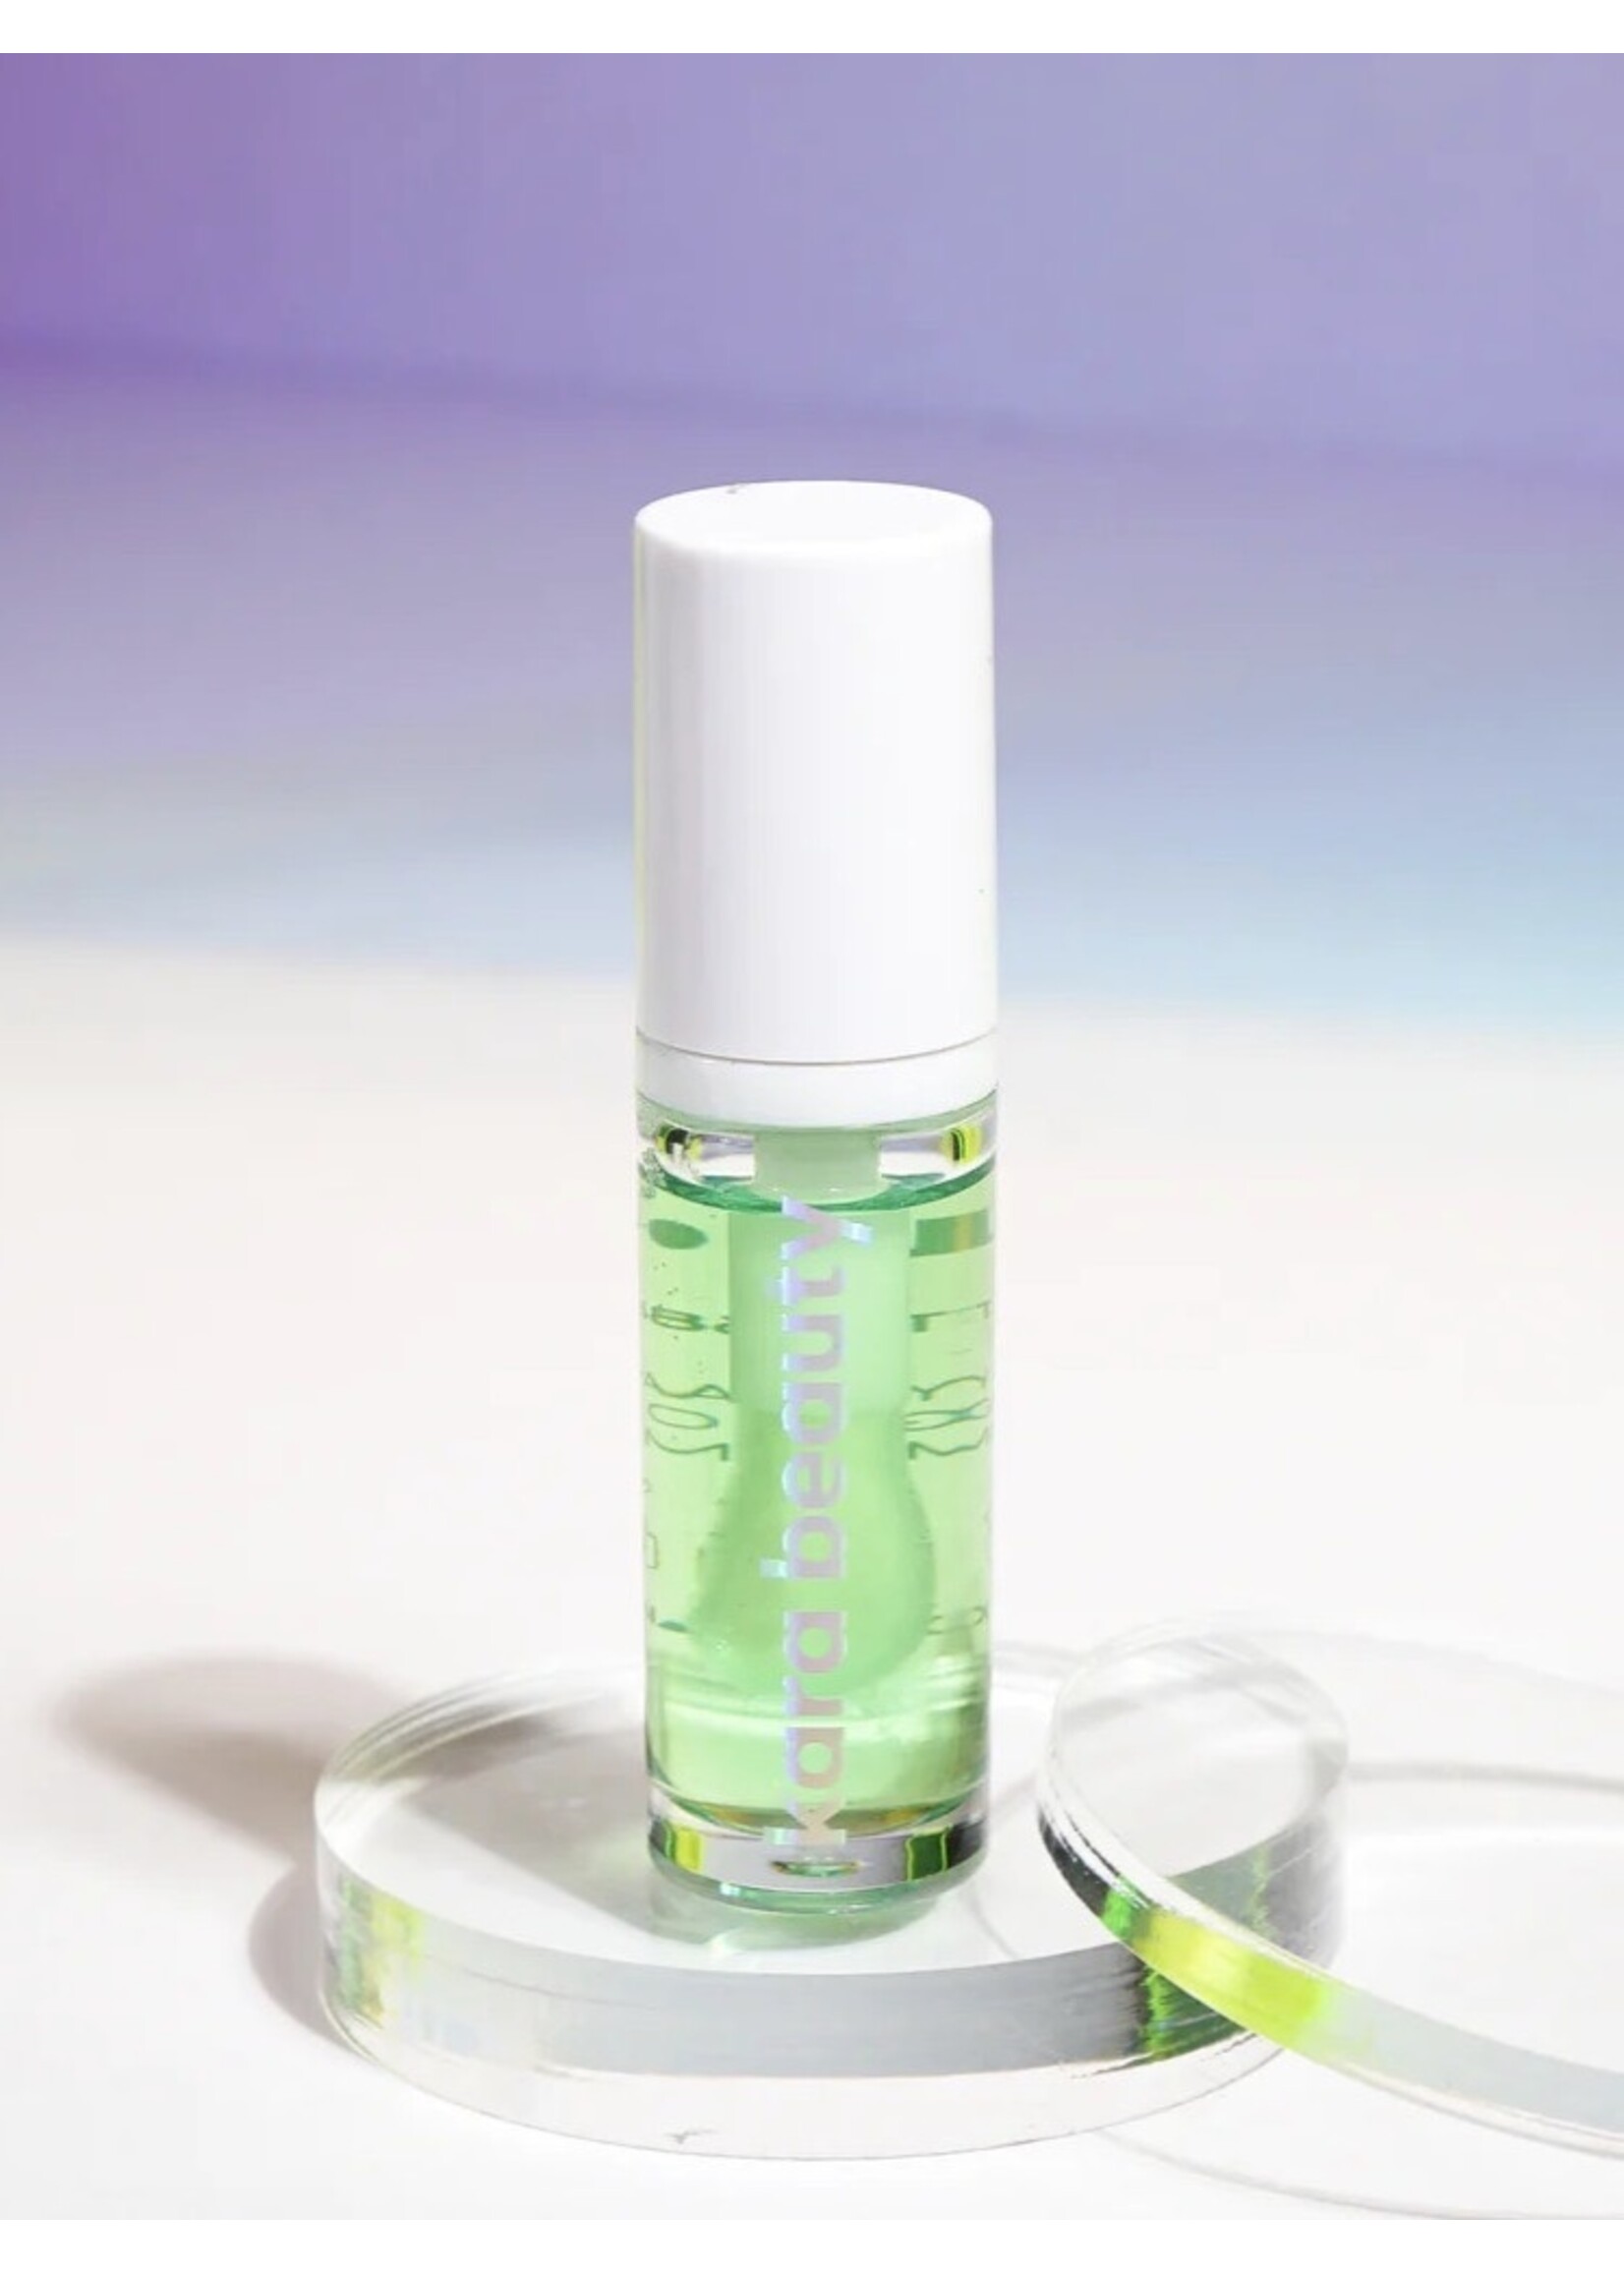 Kara Beauty Lip oil "Essentials" by Kara Beauty